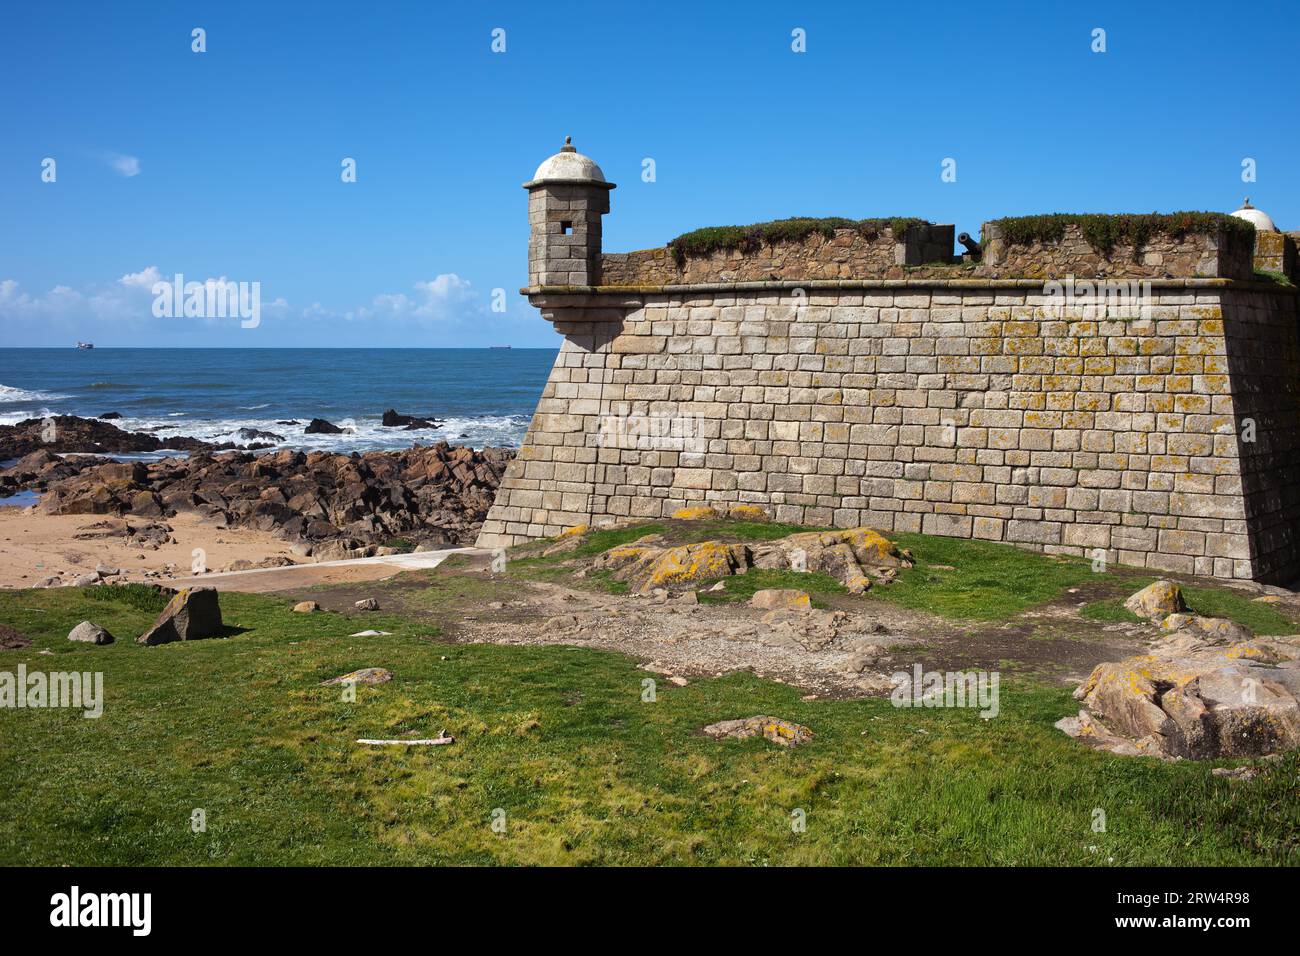 Queijo Castle (Forte de Sao Francisco Xavier) by the Atlantic Ocean in Porto, Portugal Stock Photo